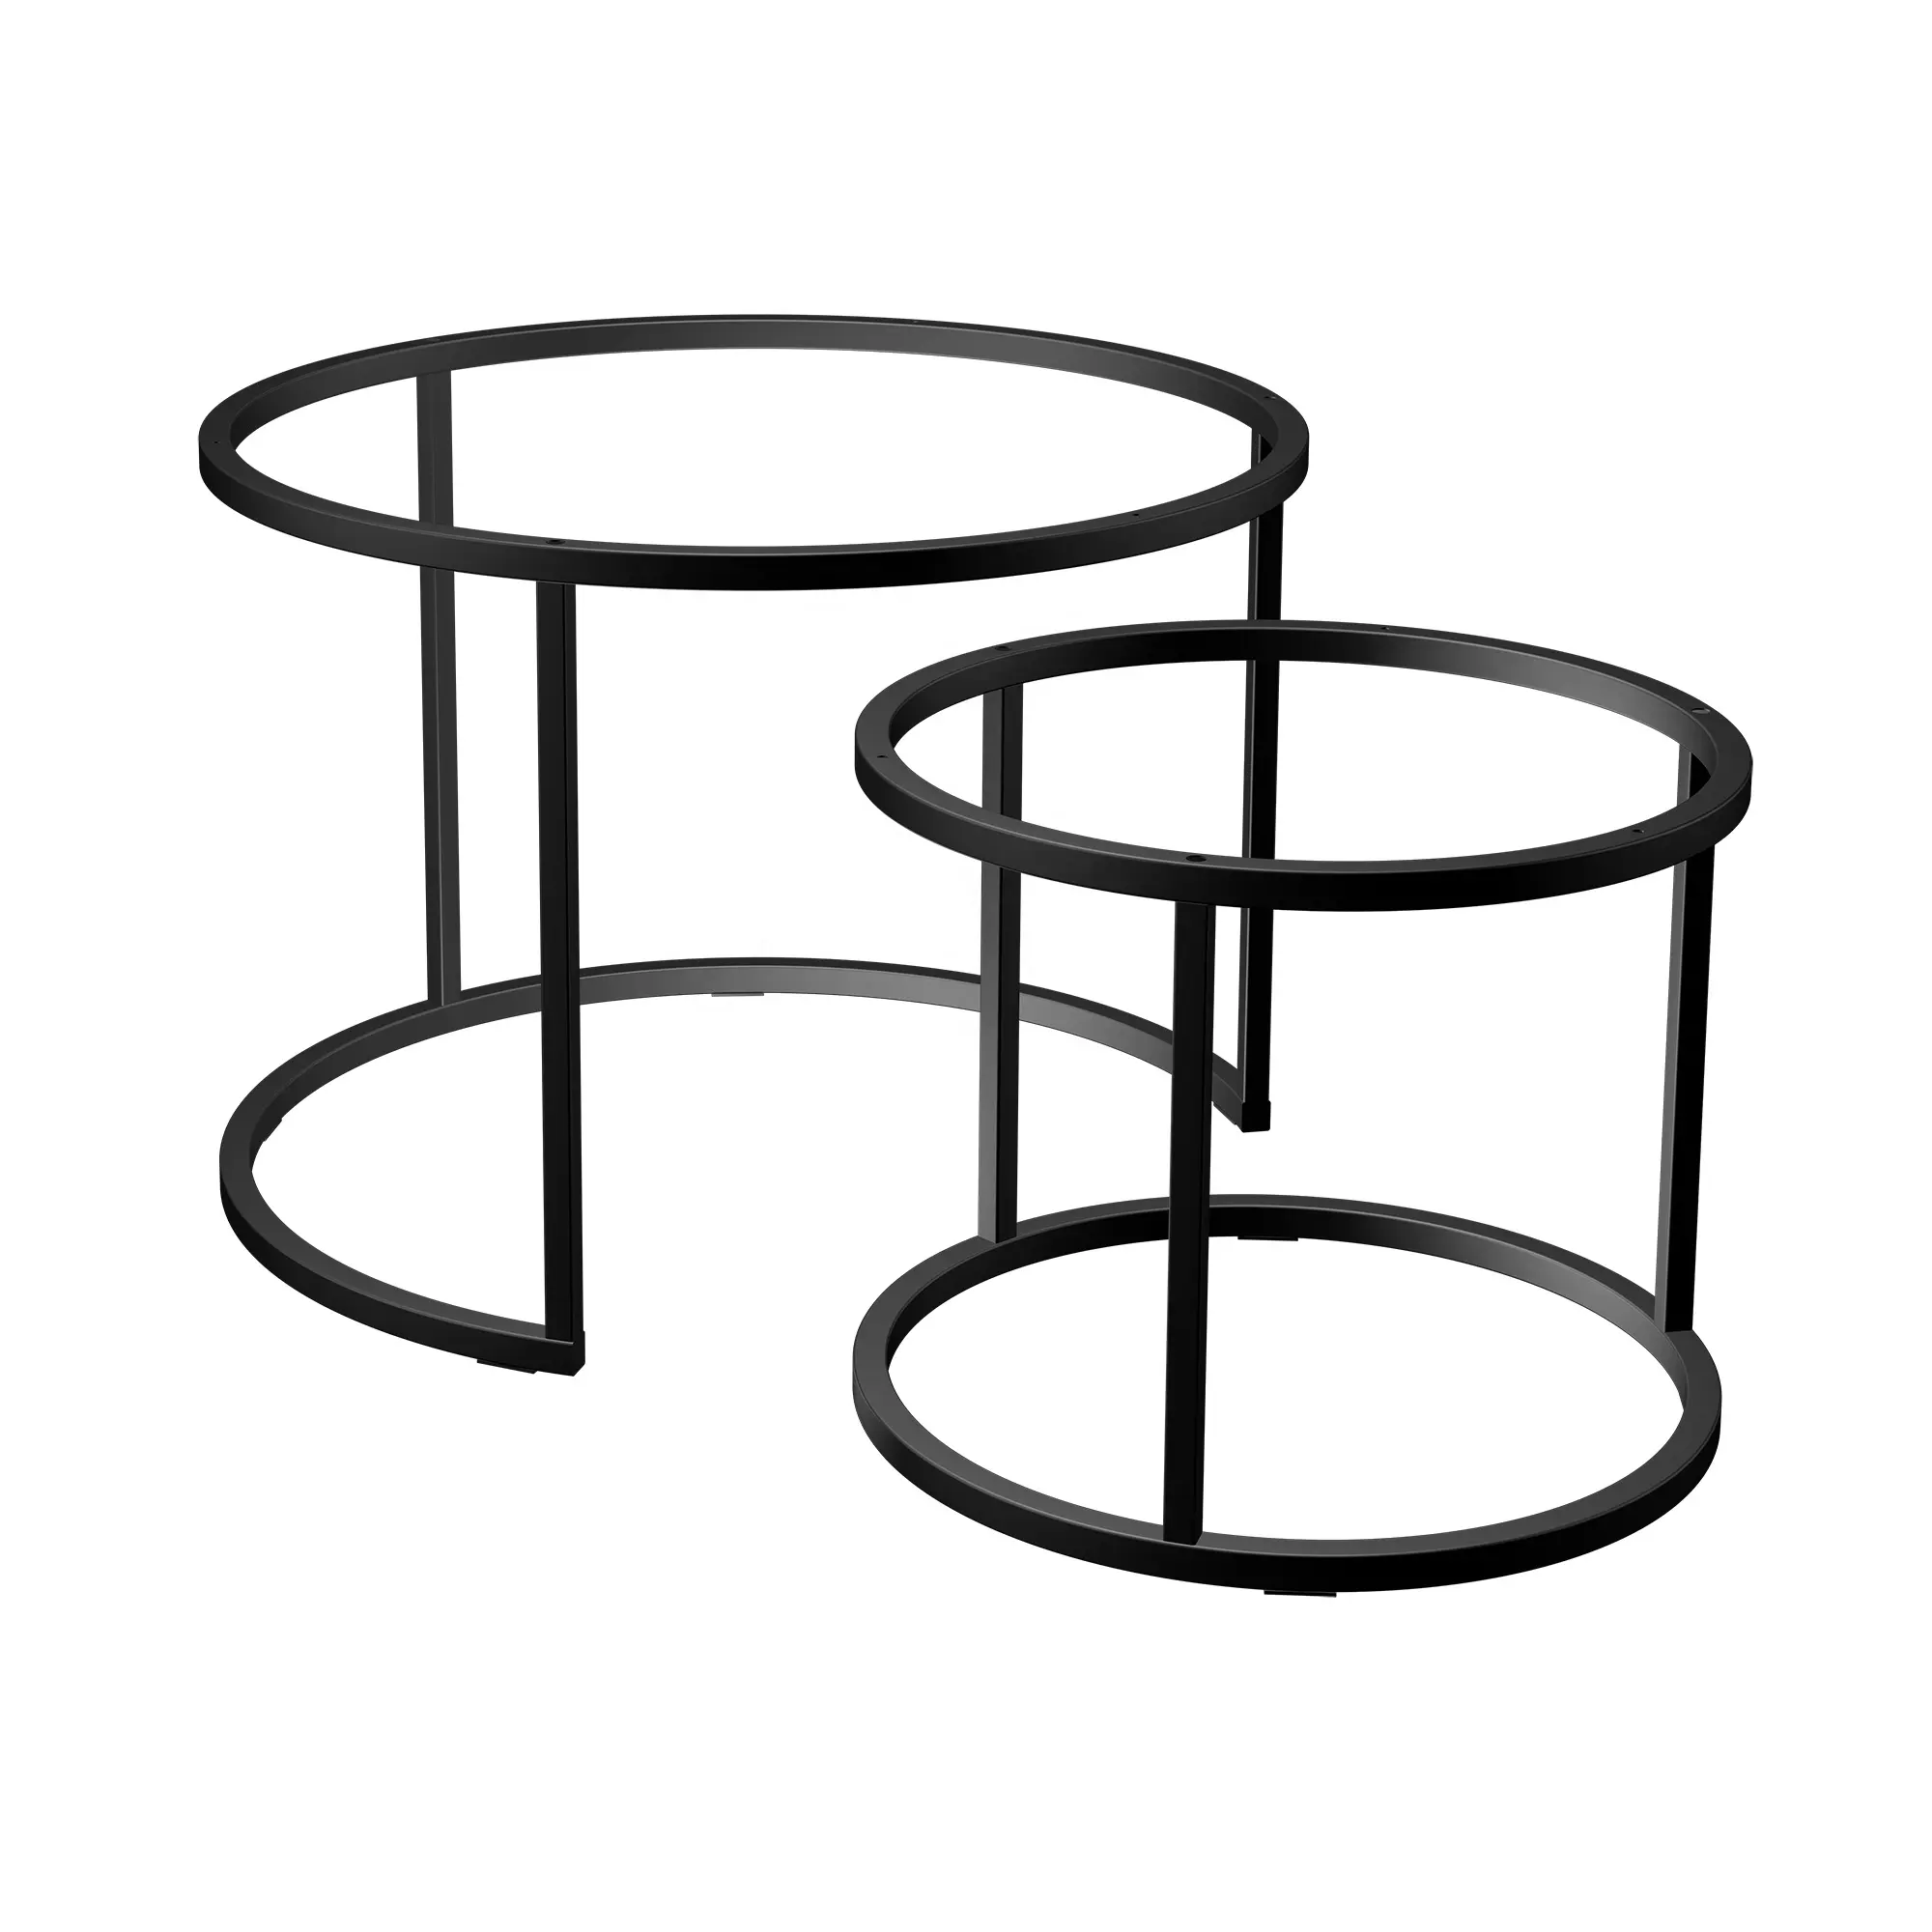 Marco de mesa doble de hierro fundido de alta calidad para mesas de centro Patas de mesa de centro de forma redonda